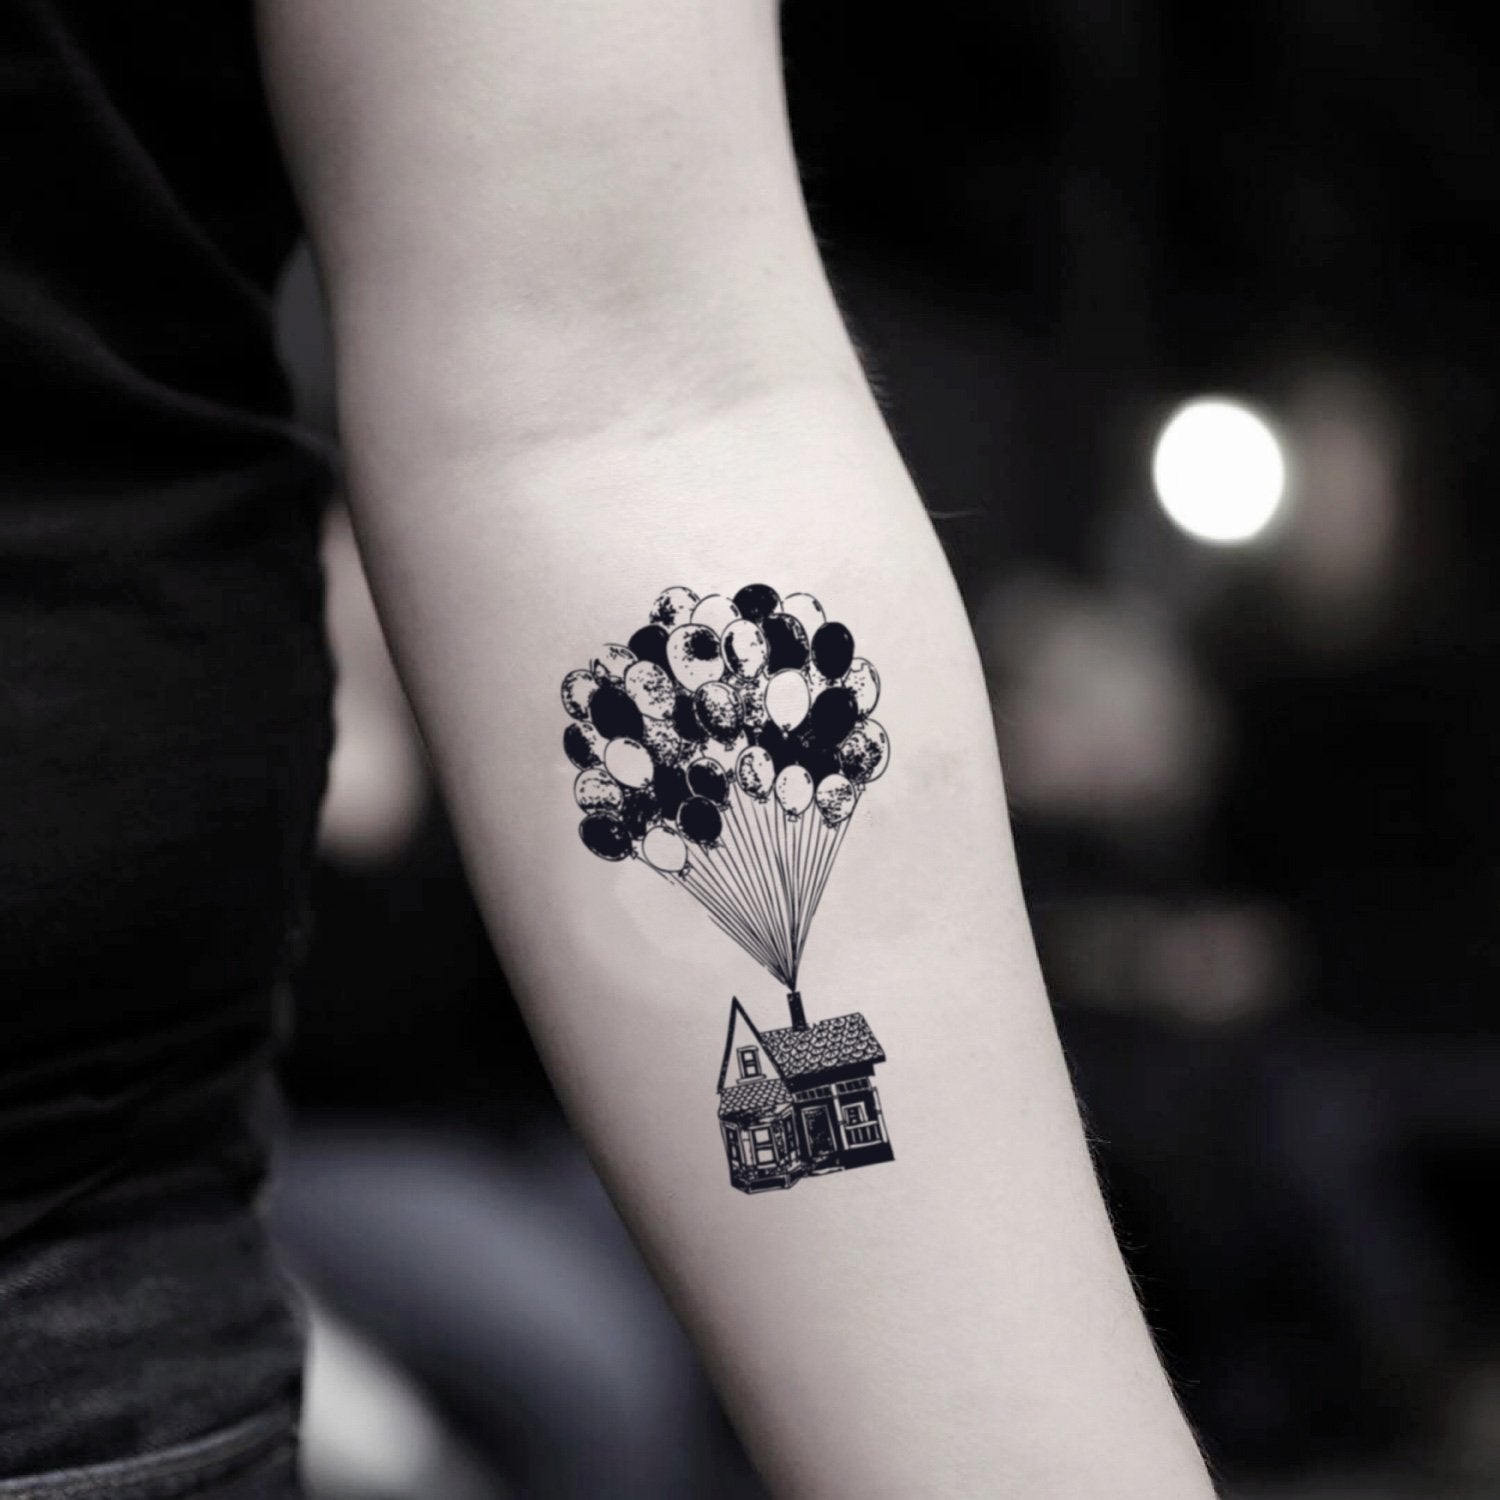 fake small up illustrative temporary tattoo sticker design idea on inner arm